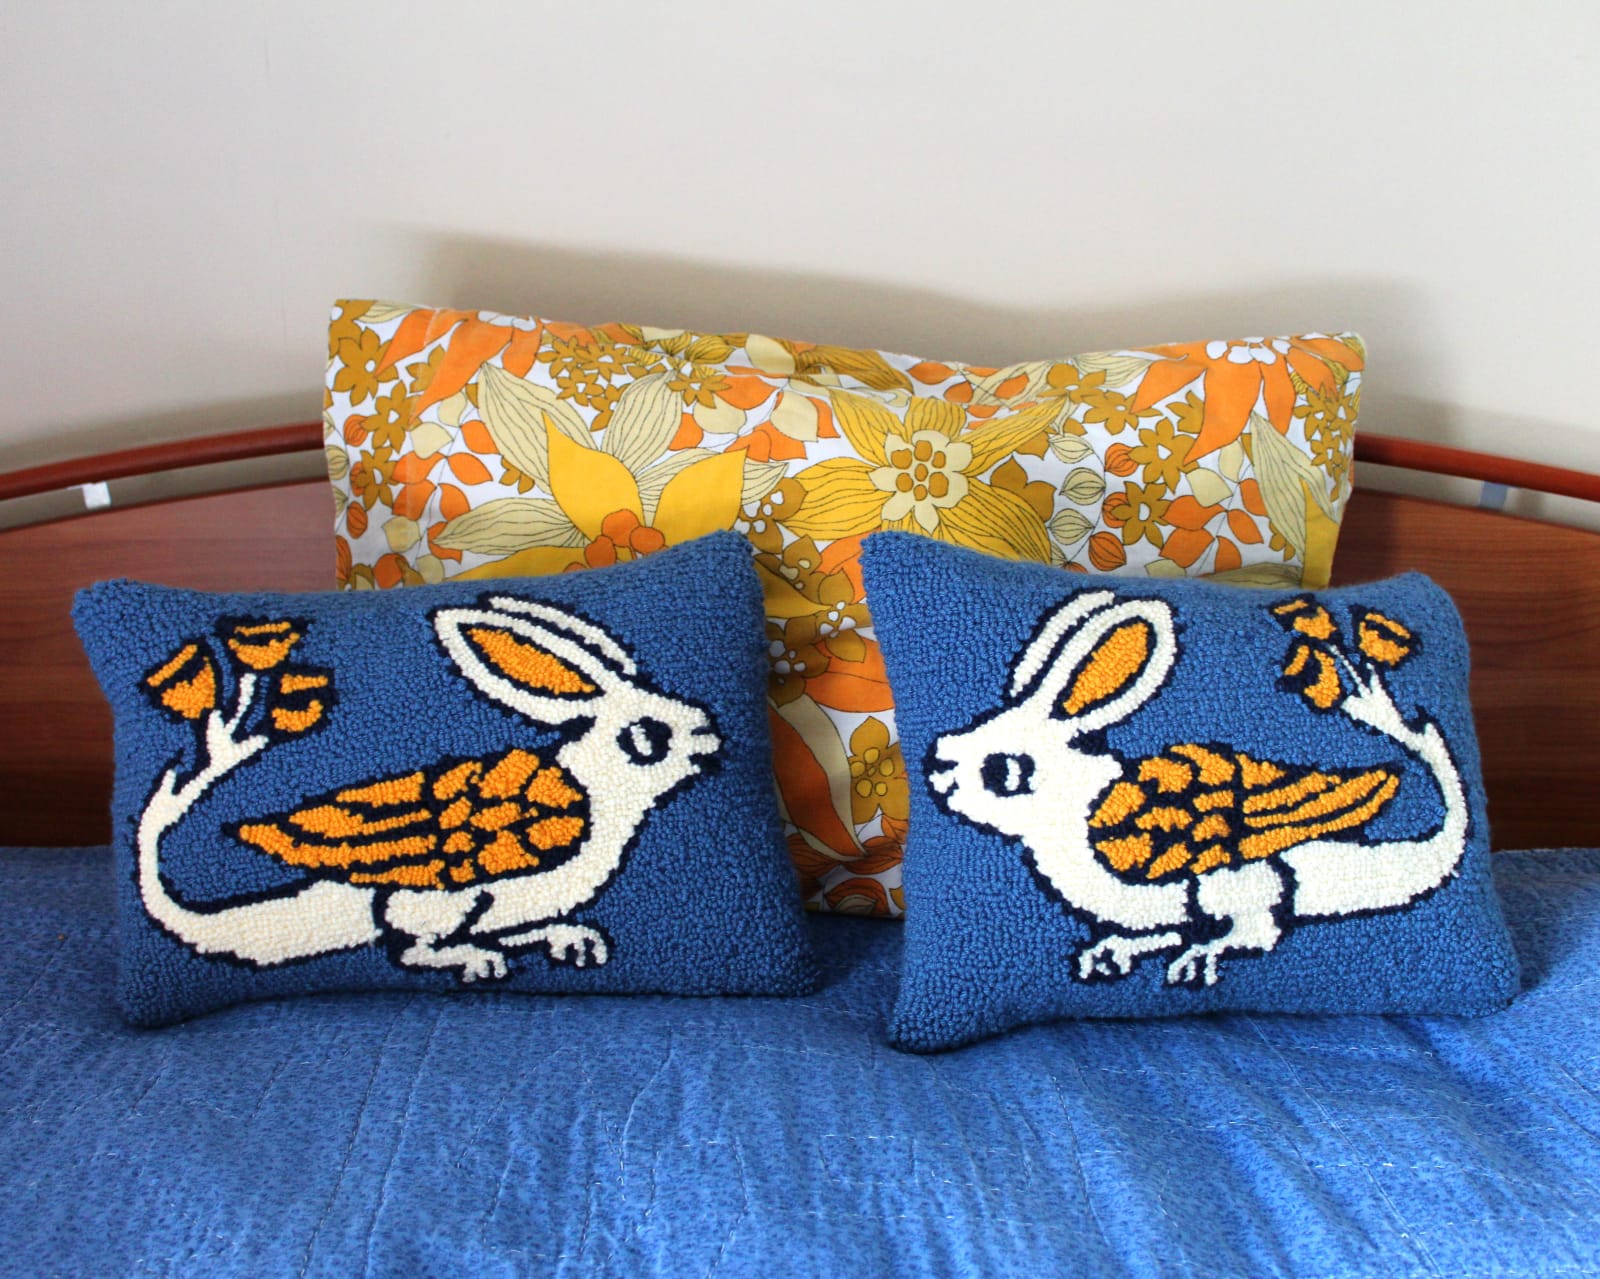 Haley Wood, Drolatic Hare Cushions, 2022